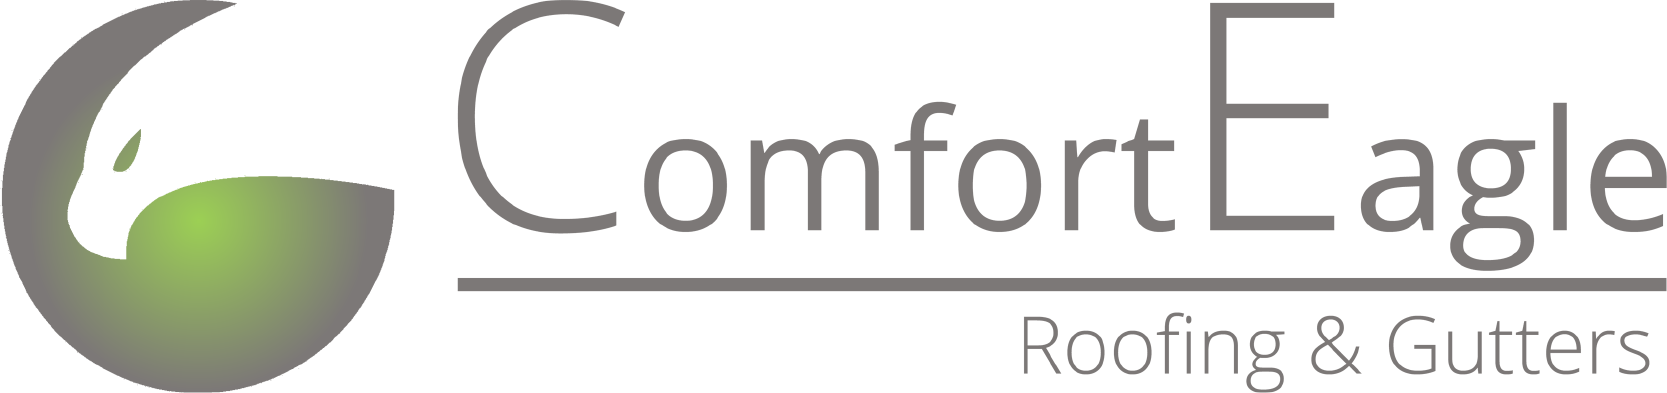 ComfortEagle Logo full color gray text